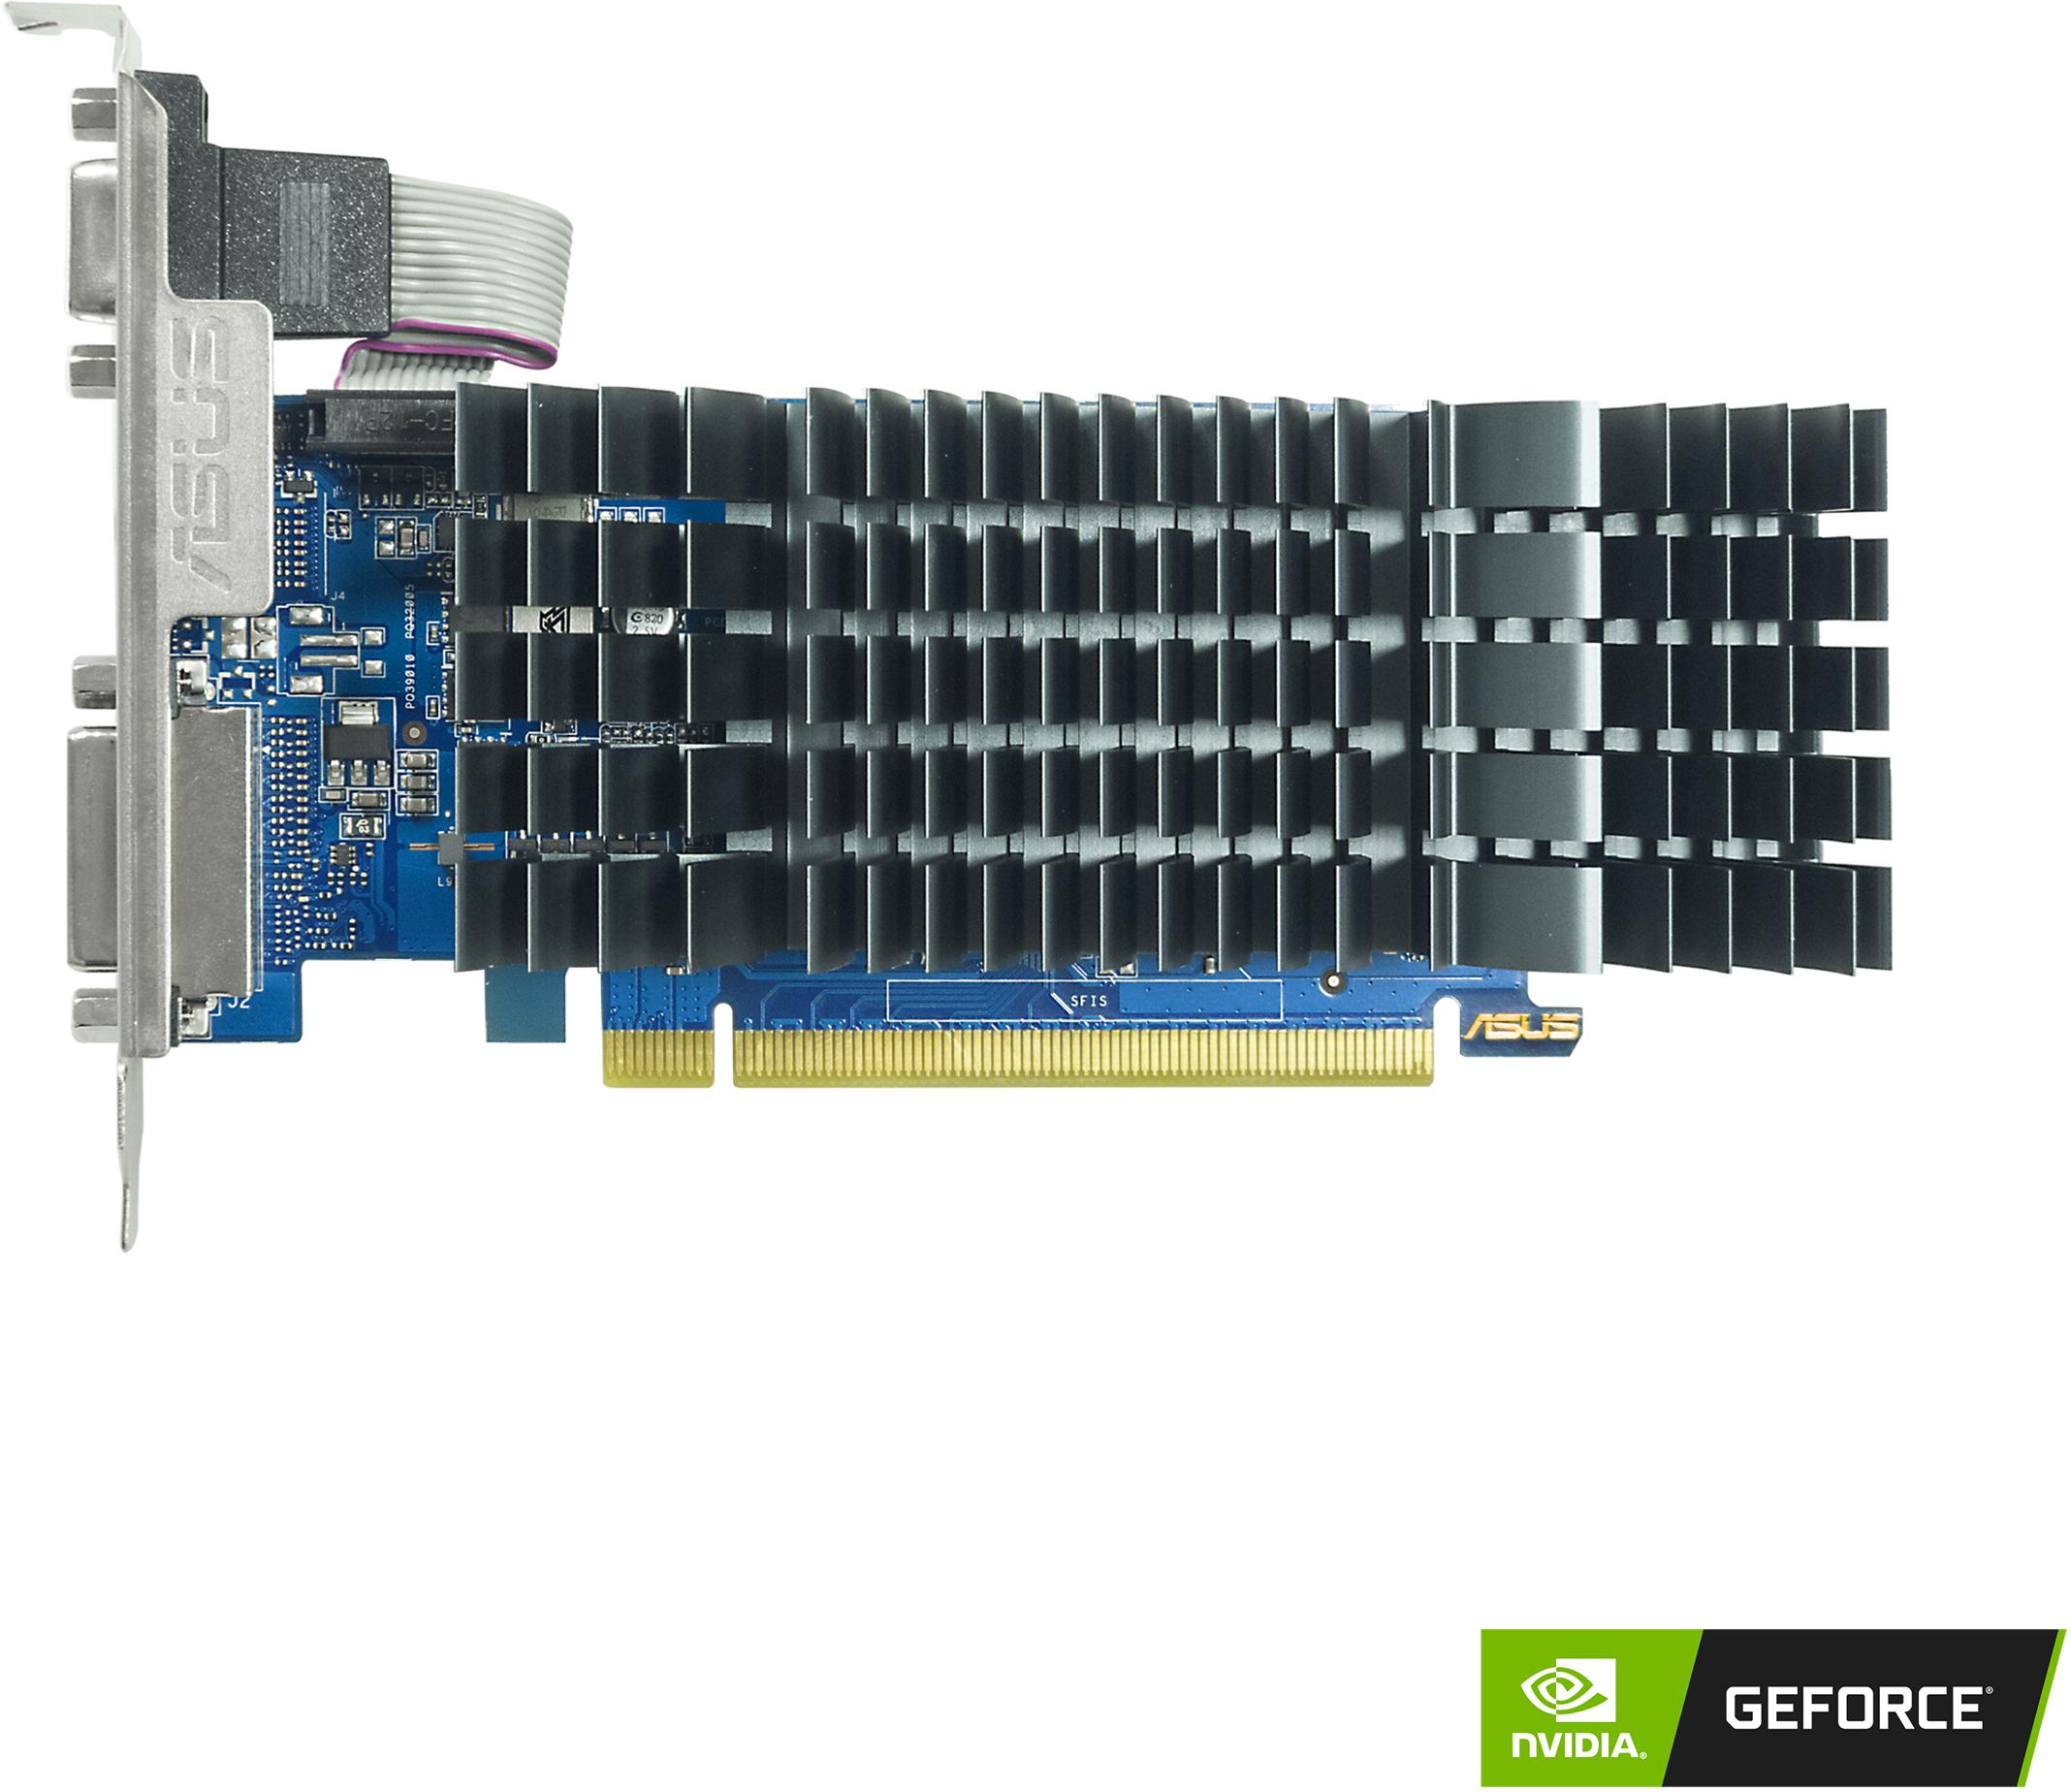 Asus - Tarjeta Gráfica Asus GeForce® GT 710 Evo 2GB GDDR3